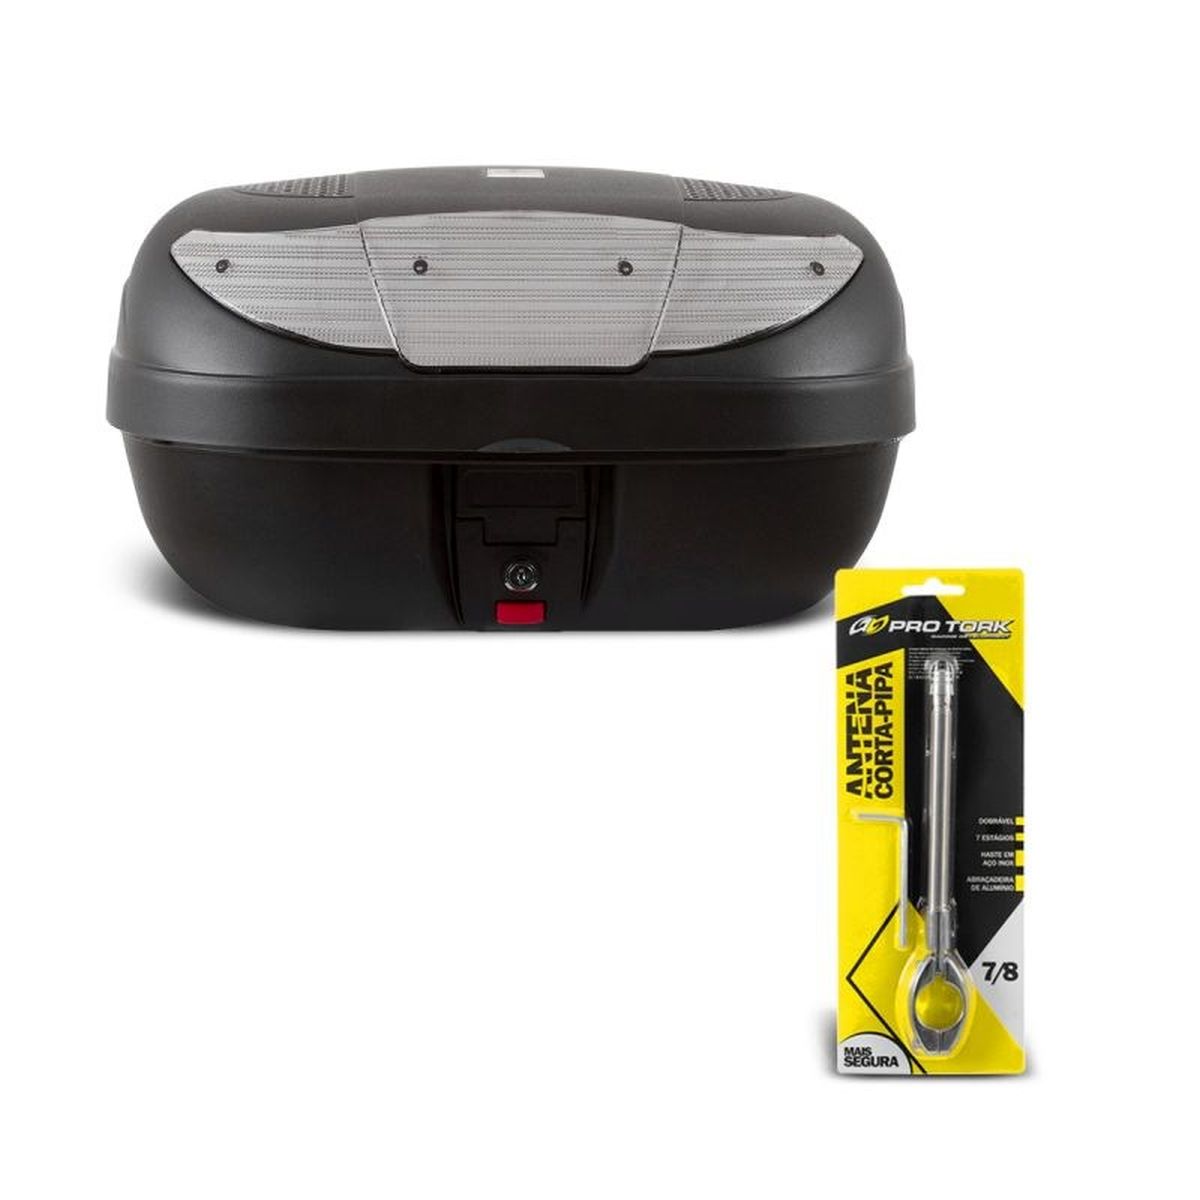 Baú 45 Litros Smartbox 2 Pro Tork com Antena Corta Pipa 7/8